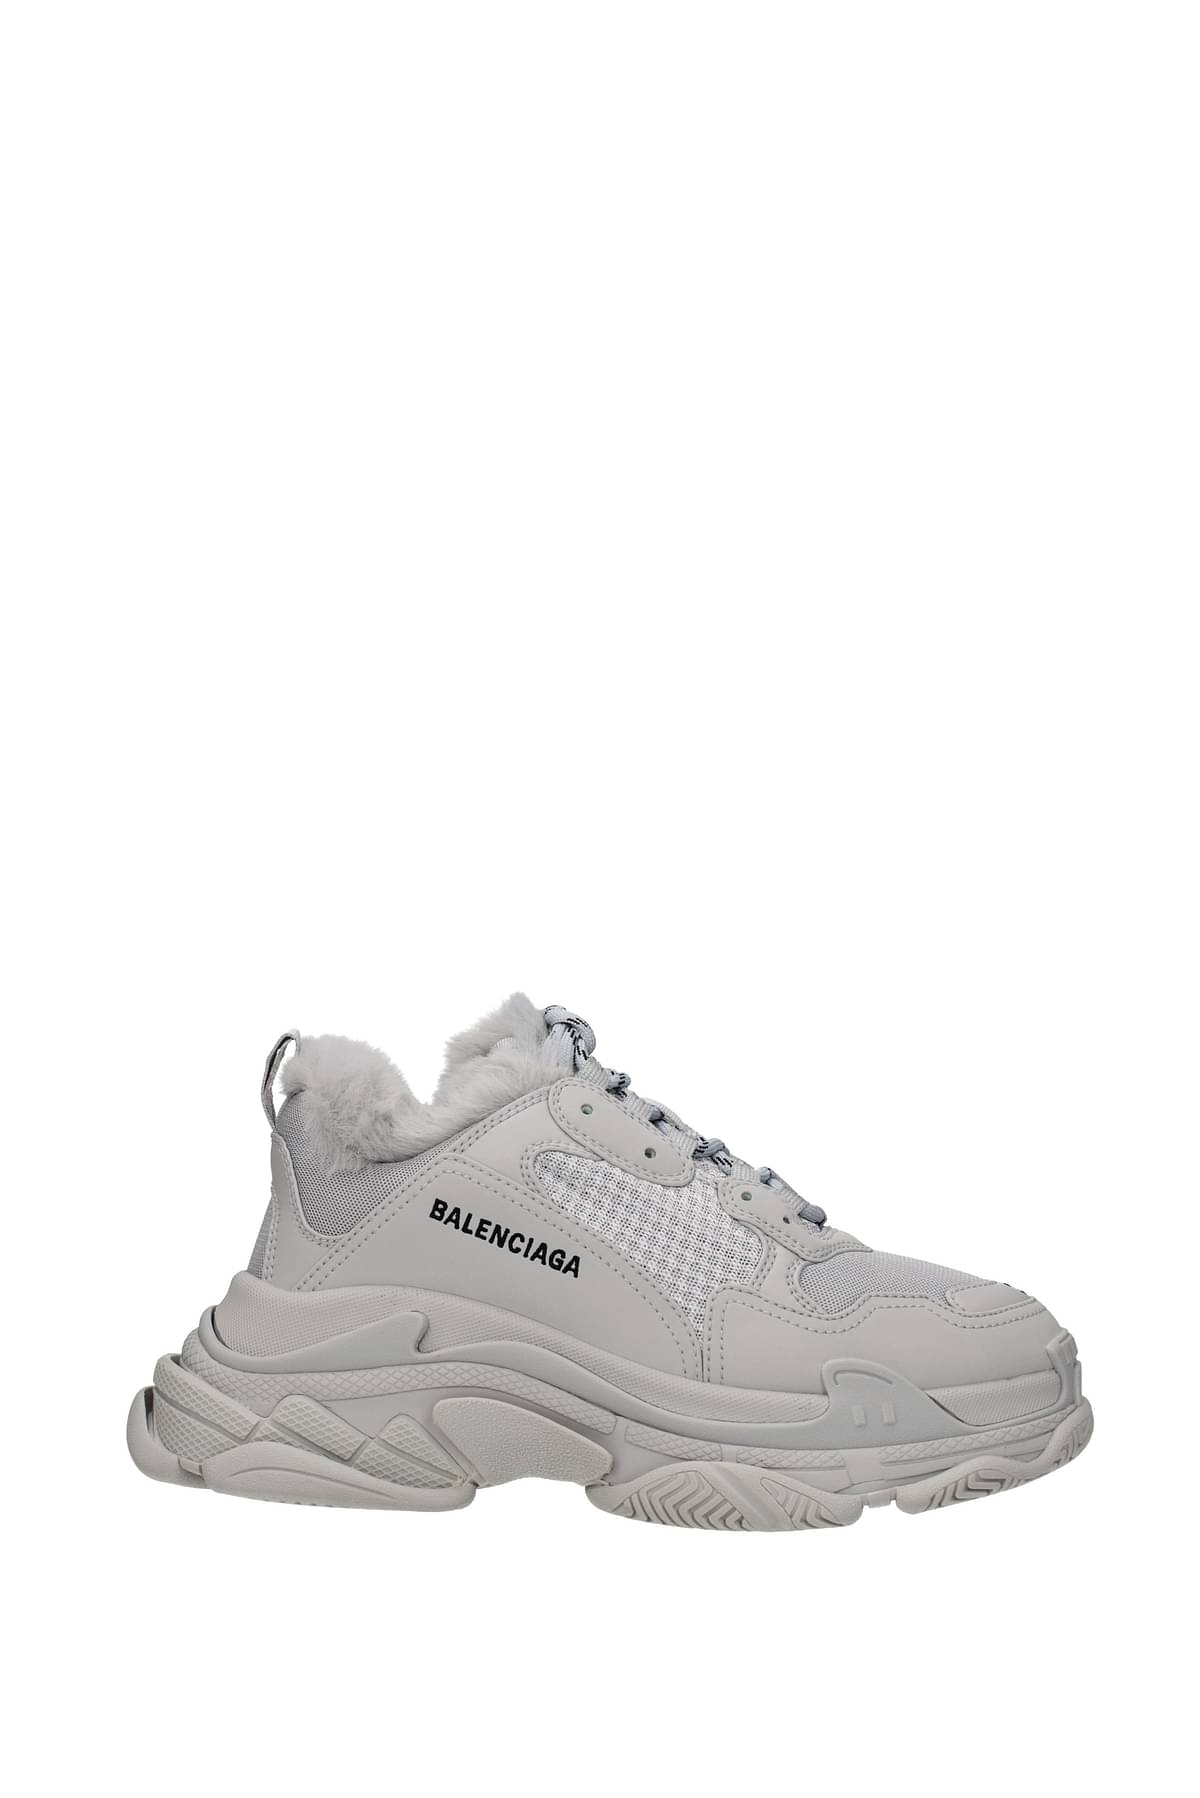 Balenciaga Sneakers s Men 668563W3CQ51210 Fabric 532,53€